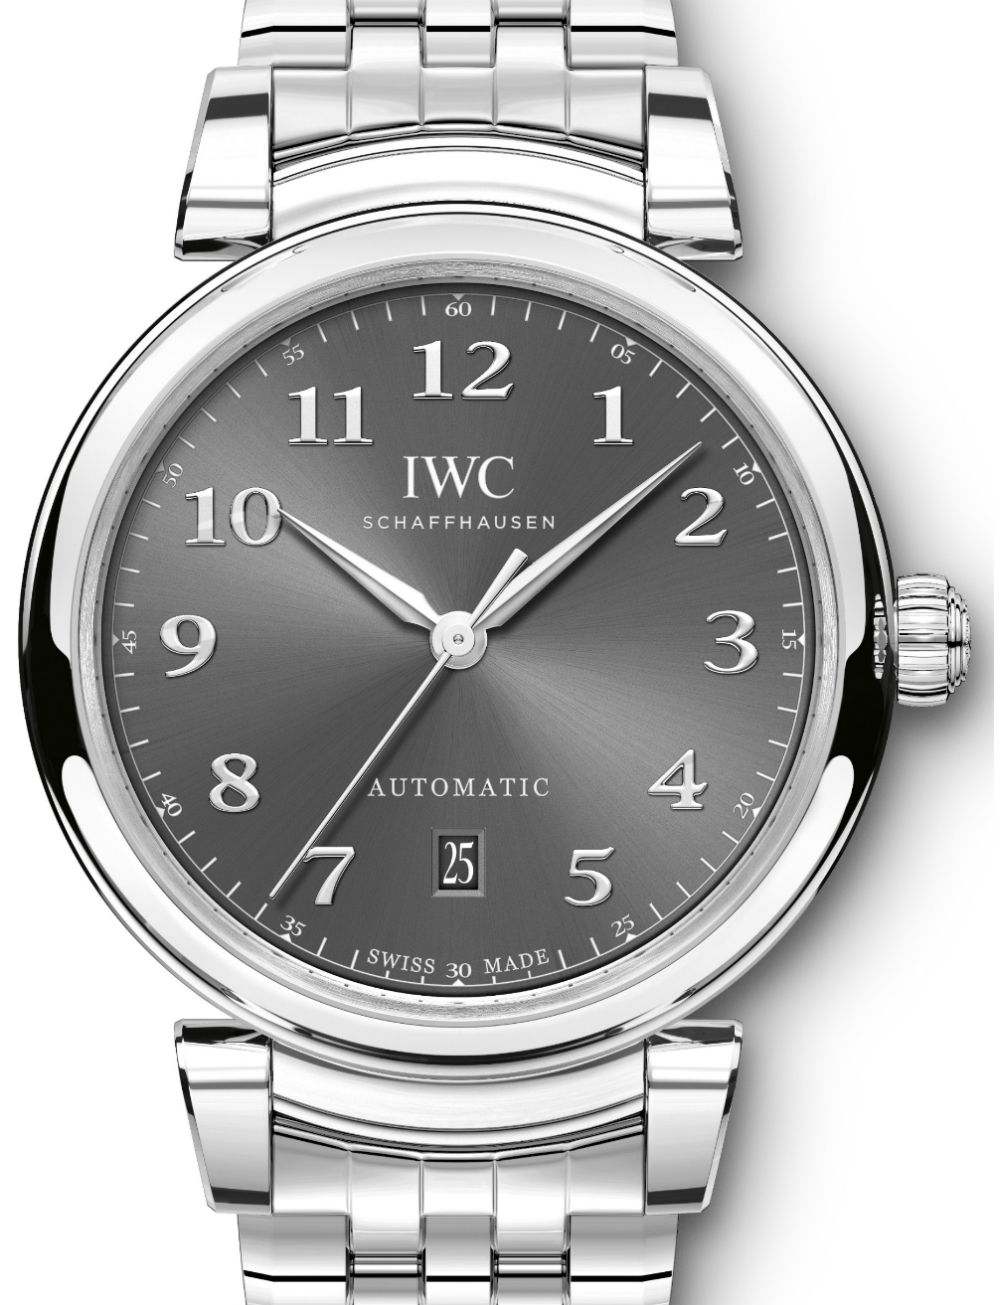 IWC Da Vinci Automatic Watch For 2017 | aBlogtoWatch